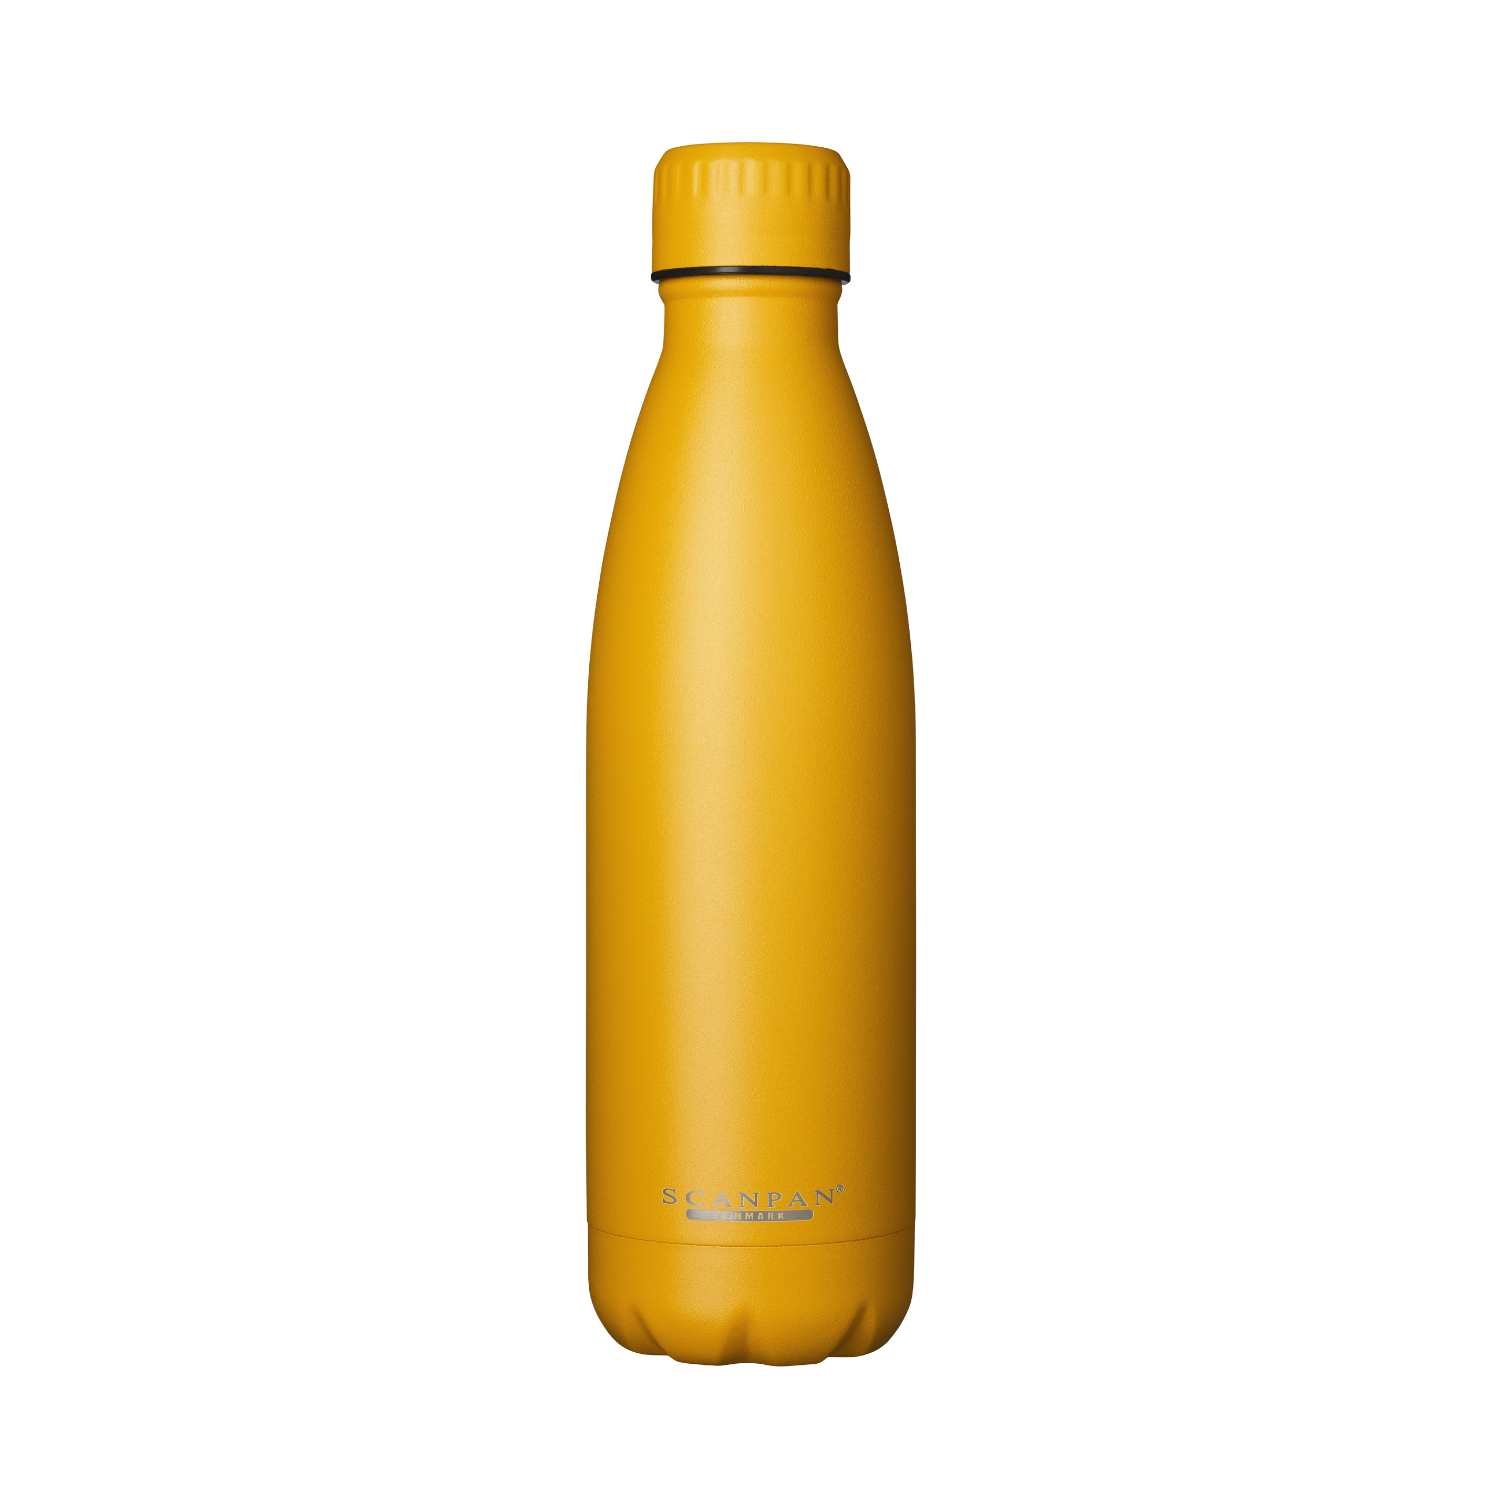 SCANPAN NEW To Go 500ml Bottle - Golden Yellow